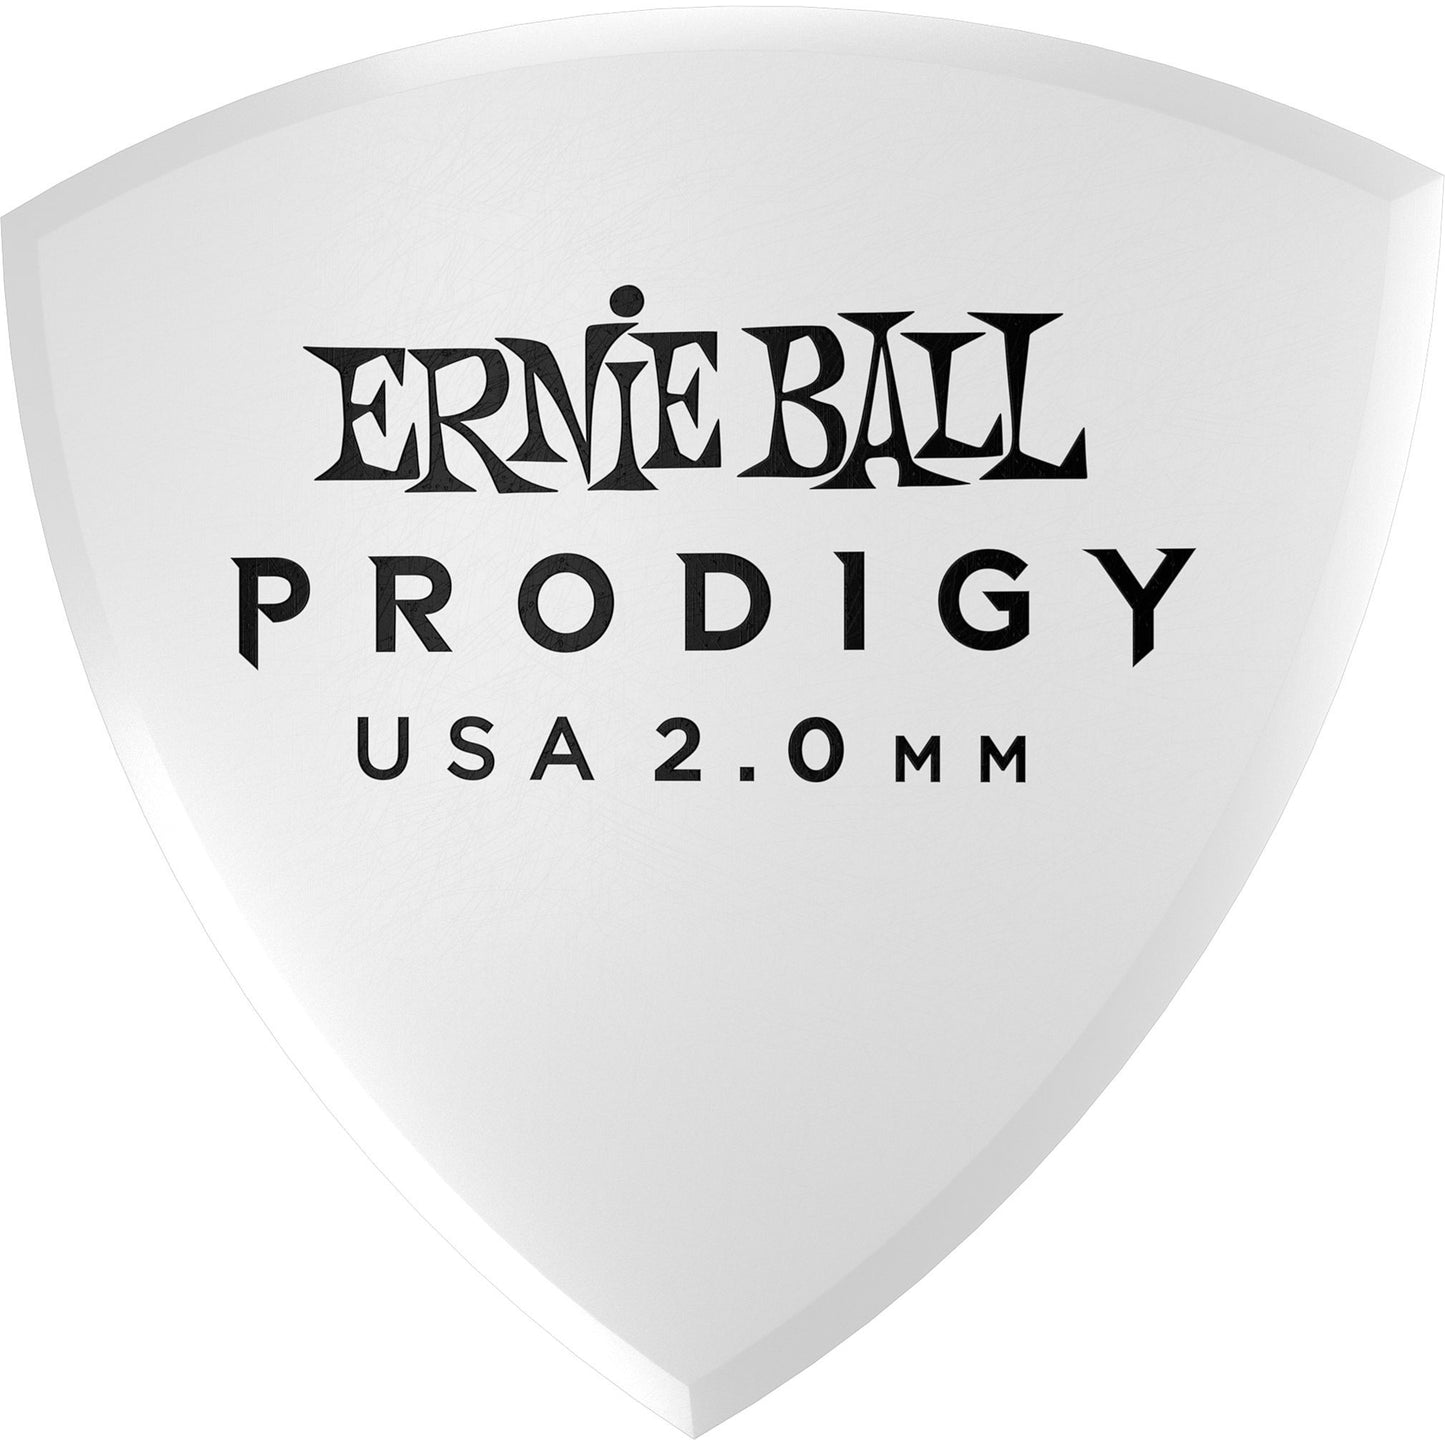 Ernie Ball Prodigy Large Shield Guitar Picks (6-Pack), White, 2.0mm